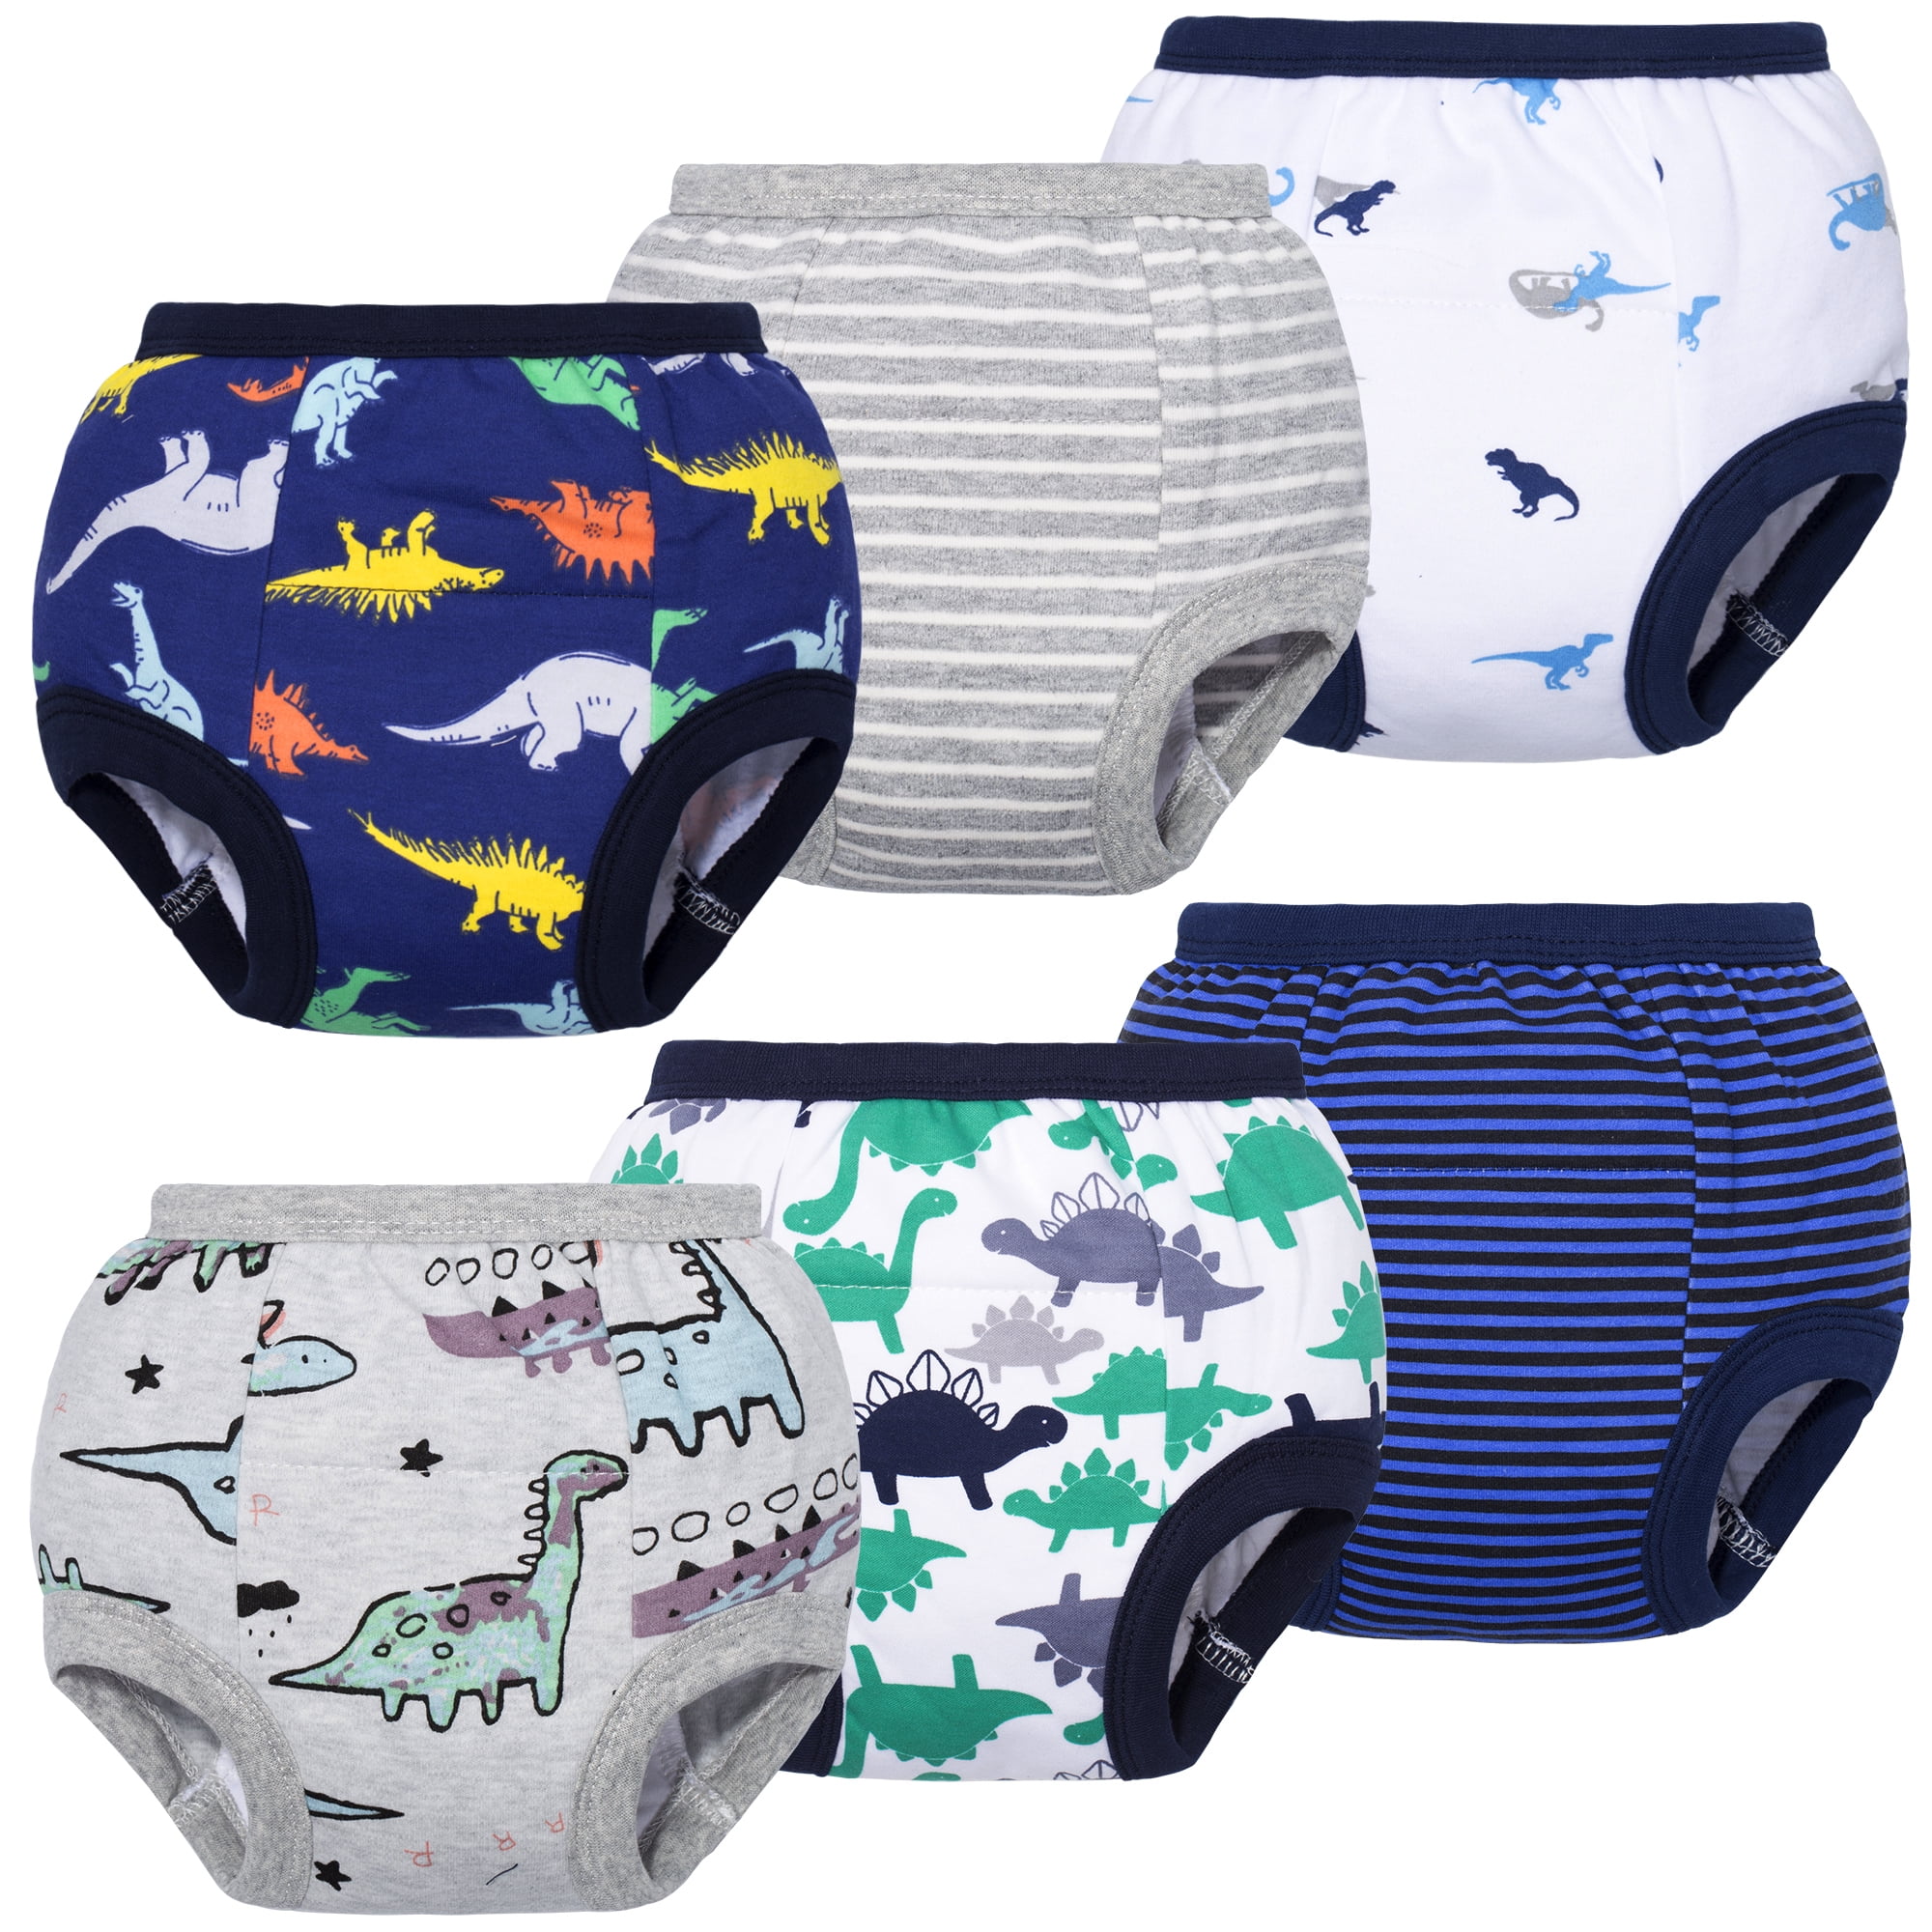 BIG ELEPHANT Toddler Potty Training Pants, Cotton Soft Training Underwear  for Girls, 5T 